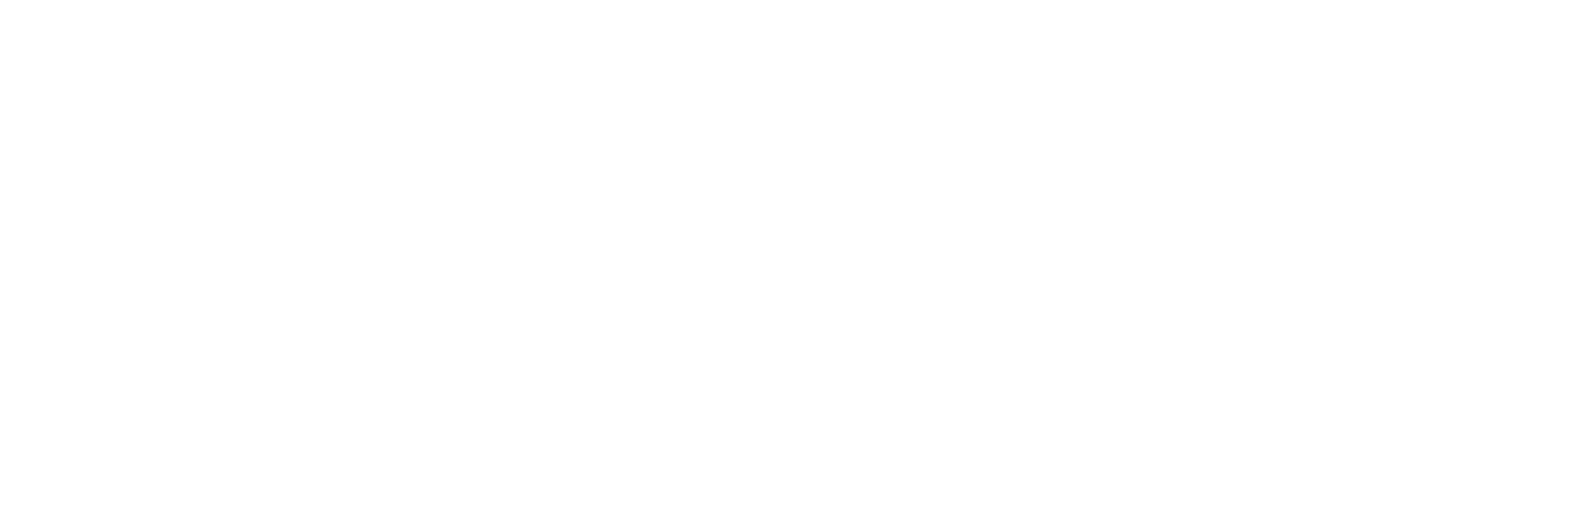 Lotus Chefs Maui